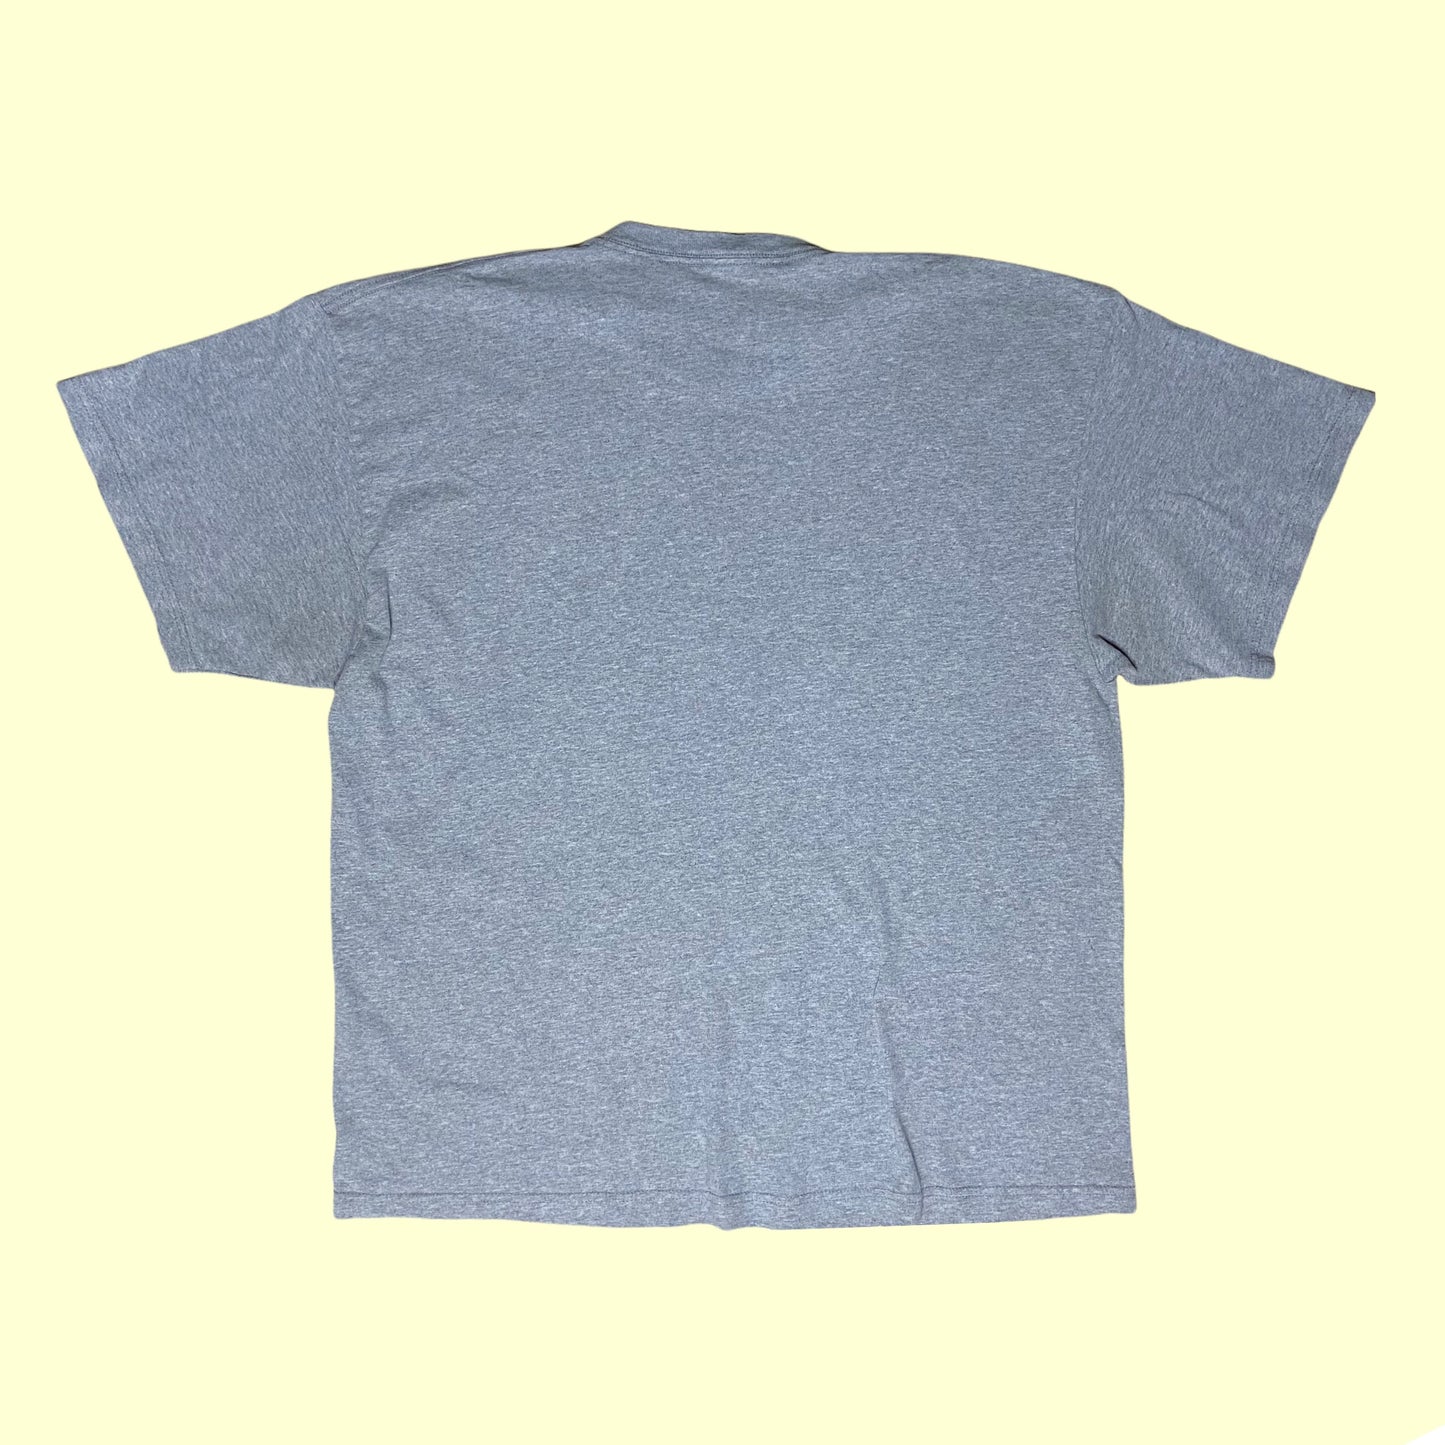 Iowa Hawkeyes T-Shirt - XXL